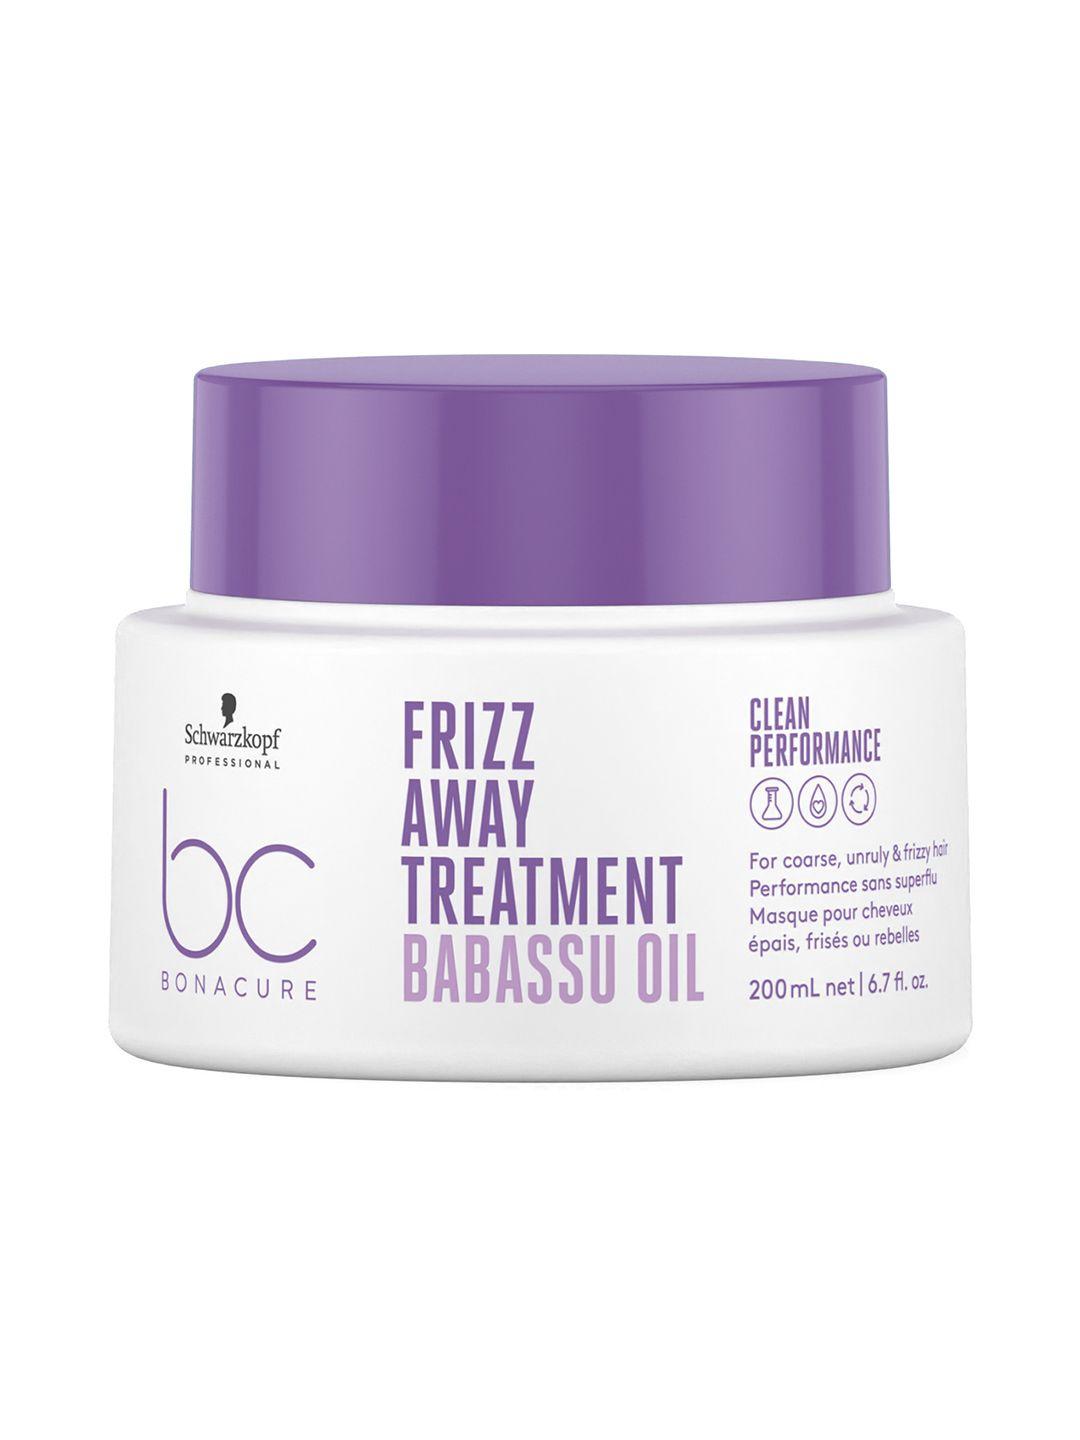 schwarzkopf professional bonacure frizz away treatment hair mask with babassu oil - 200ml